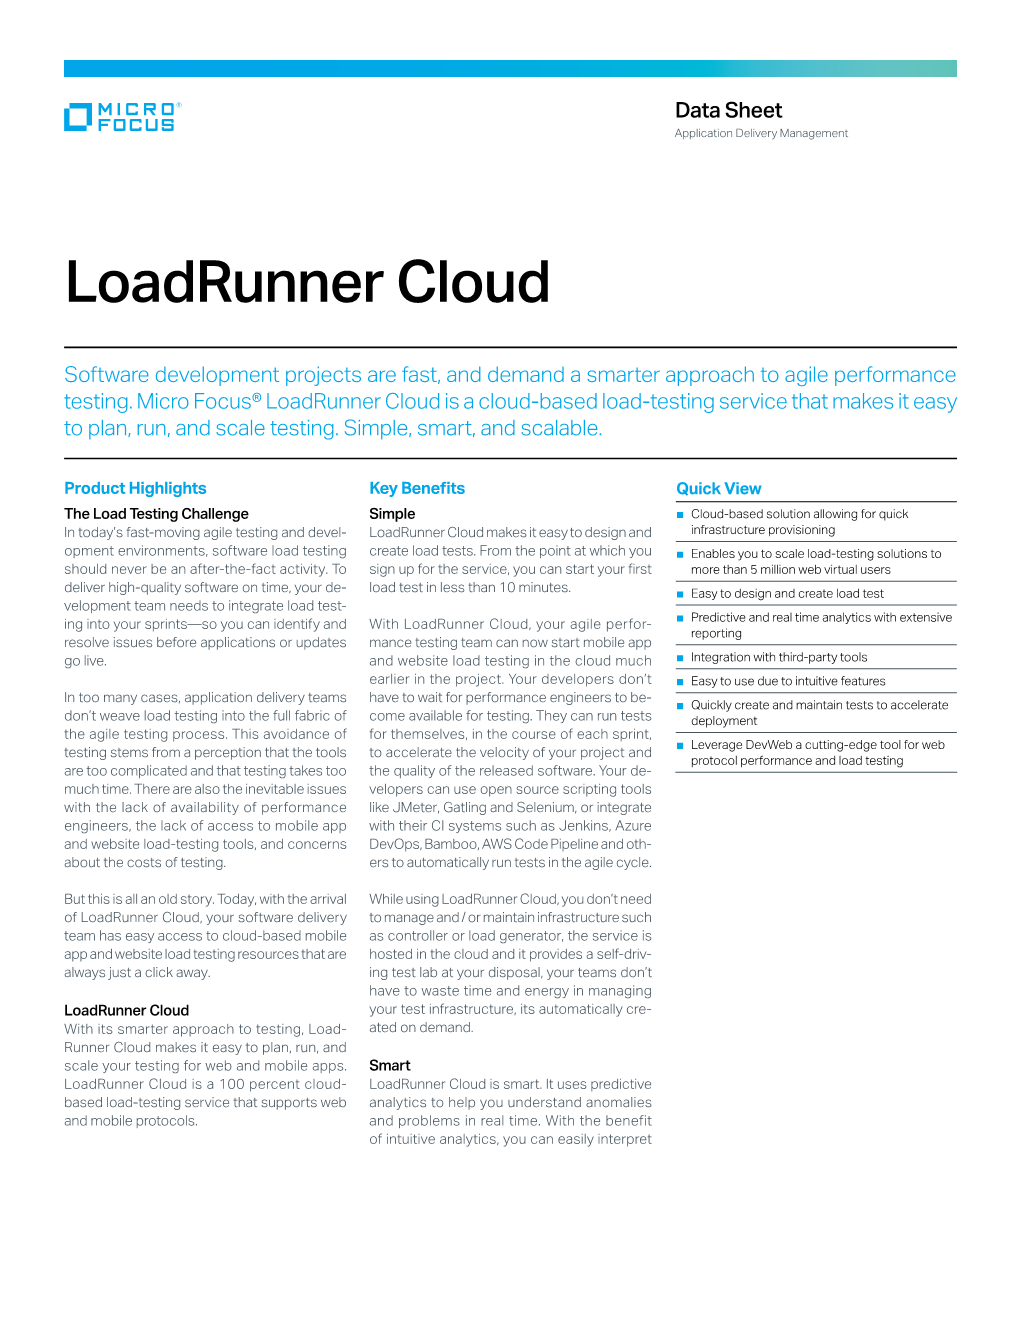 Loadrunner Cloud